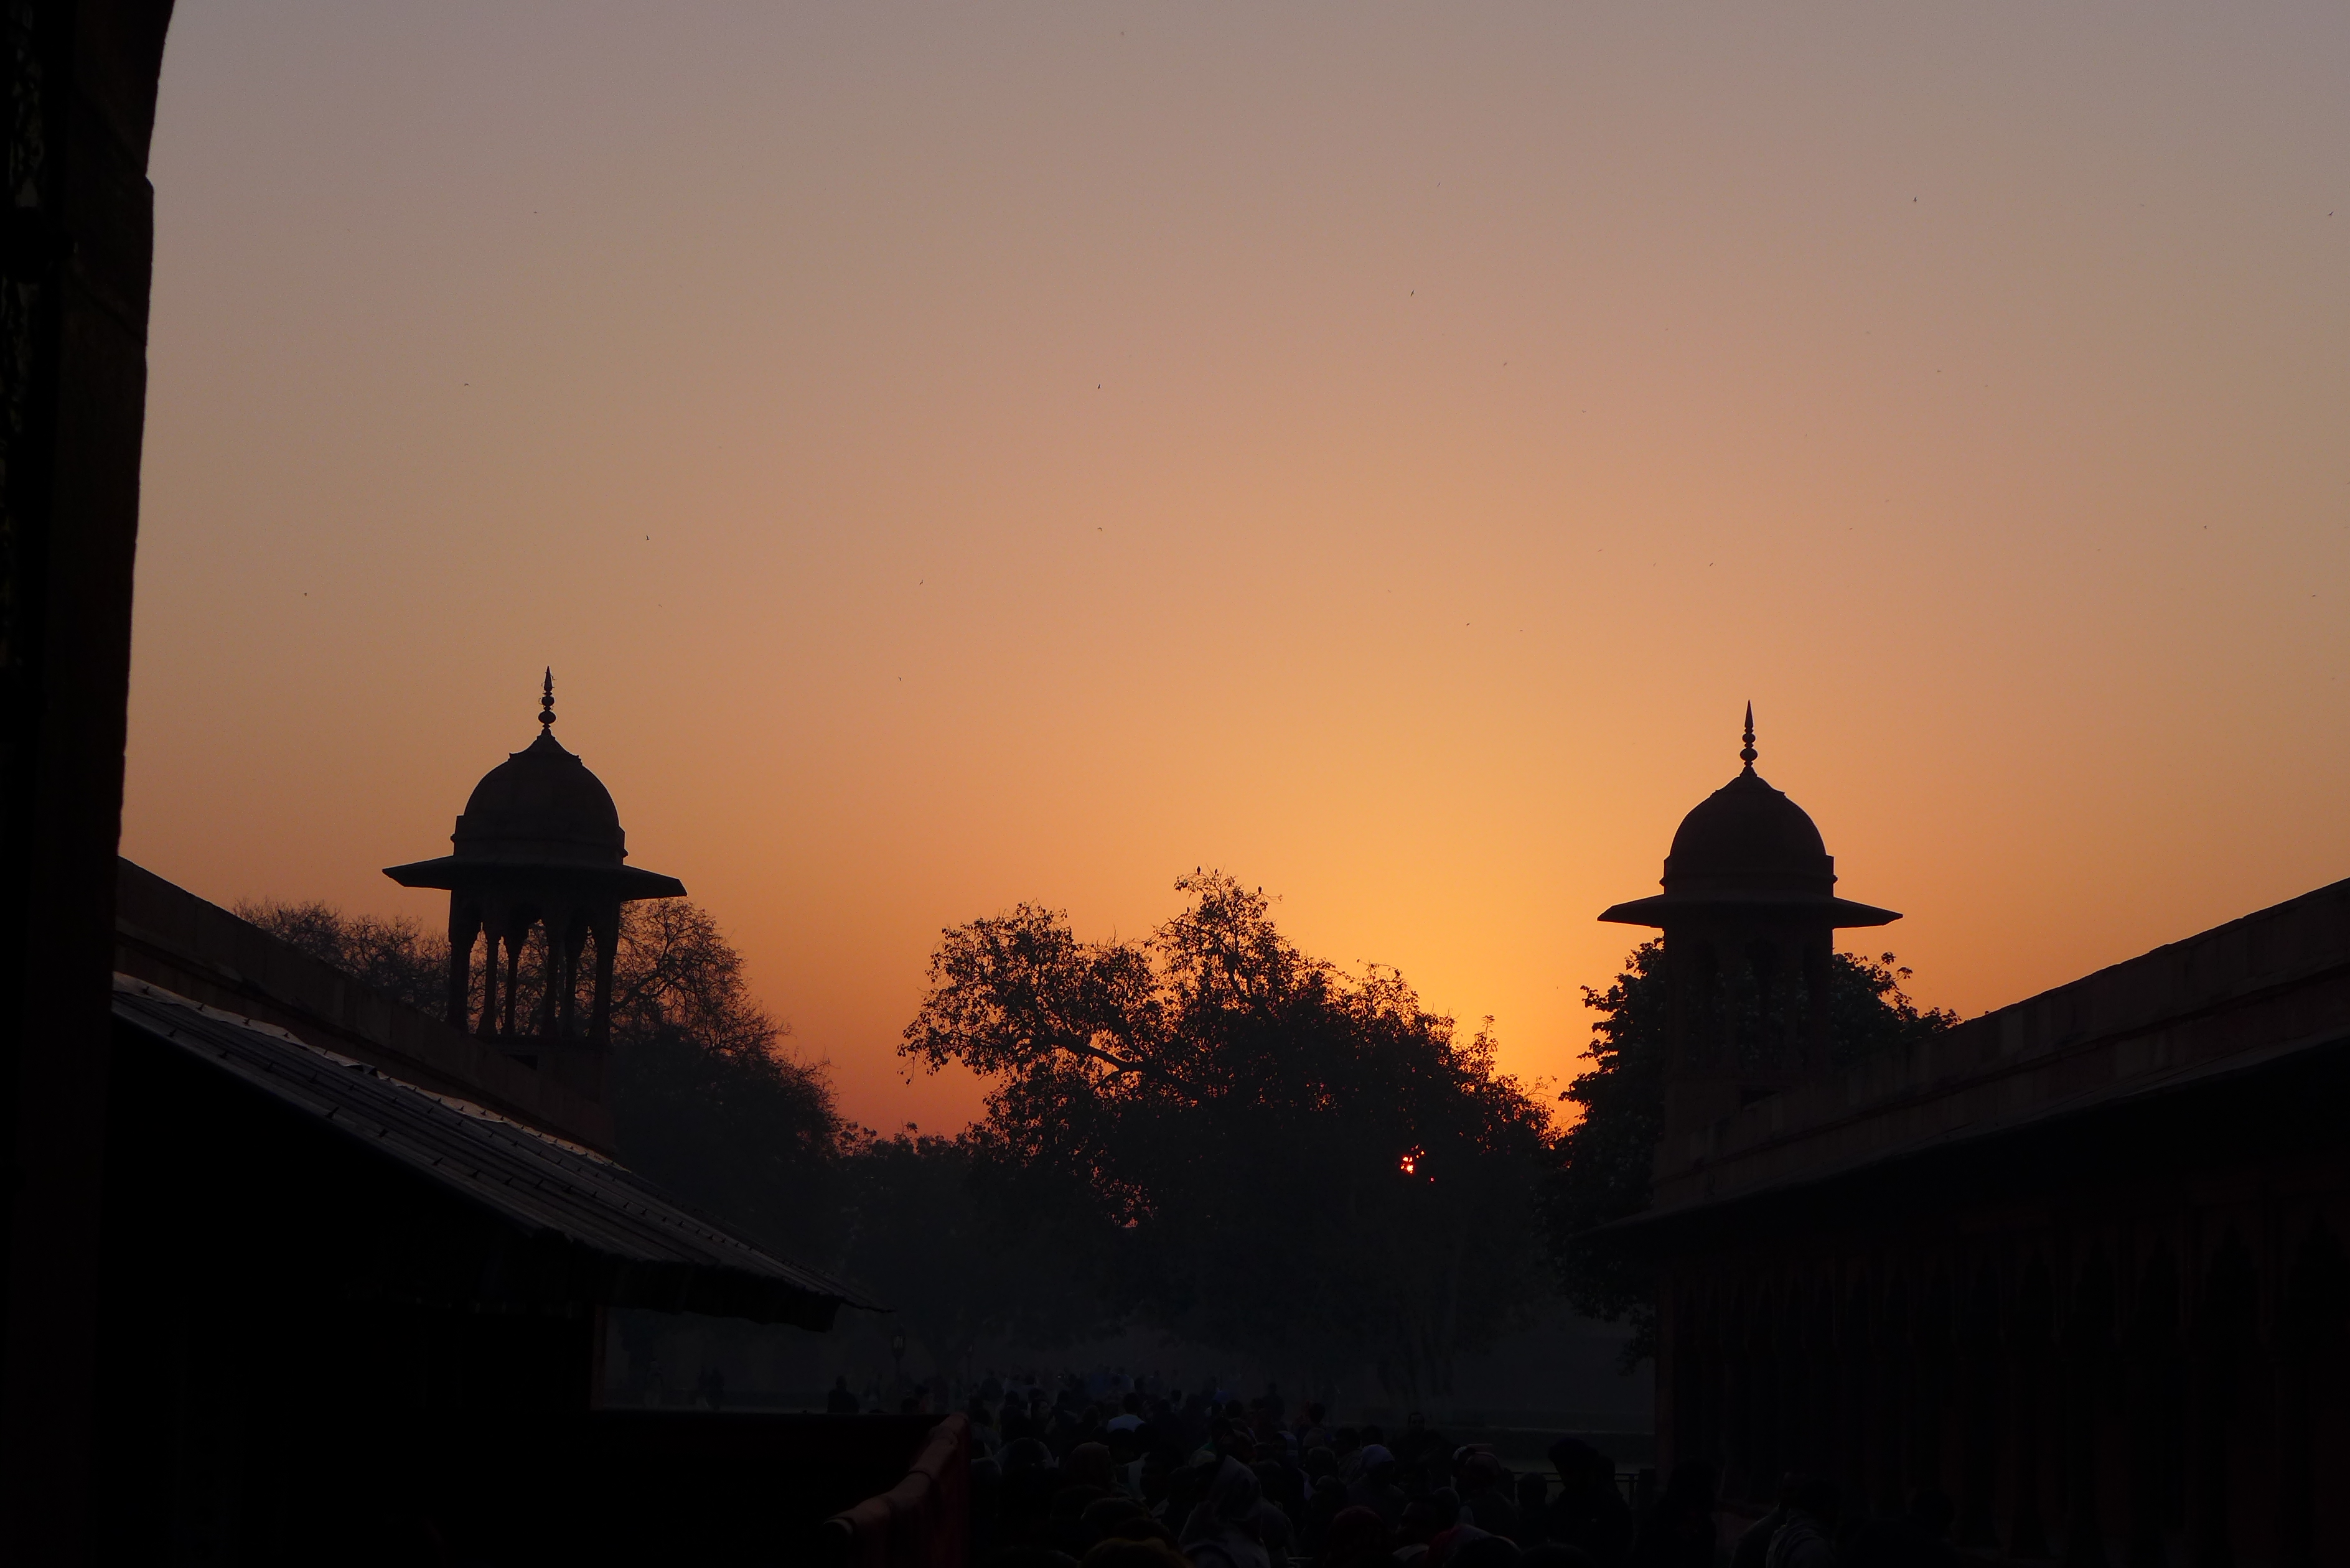 Sunrise at West Gate entrance to the Taj Mahal